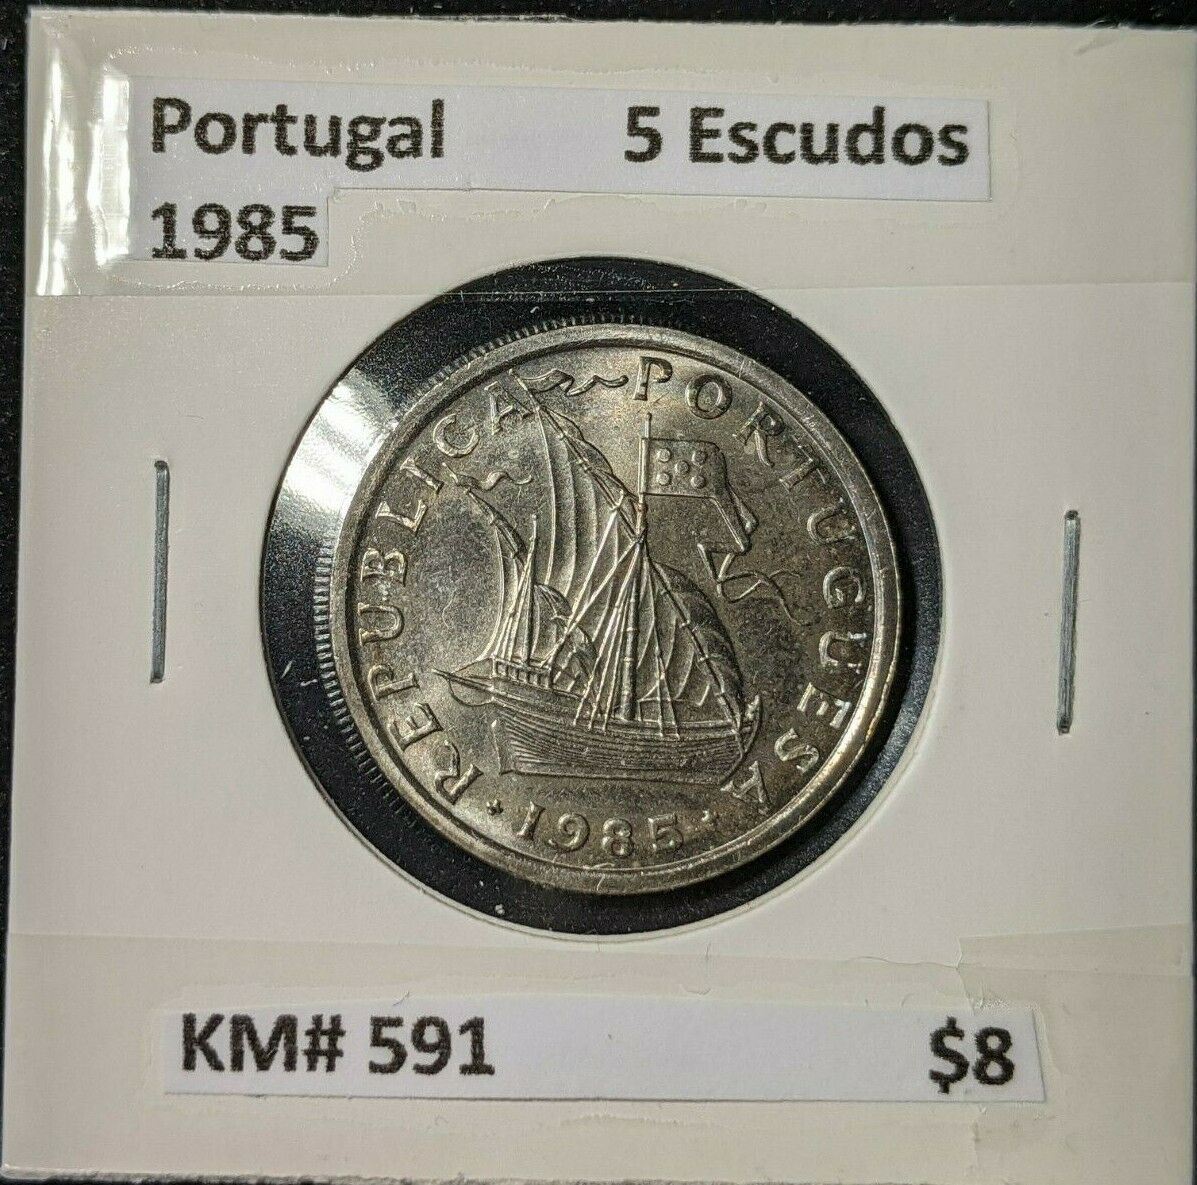 Portugal 1985 5 Escudos KM# 591 #988